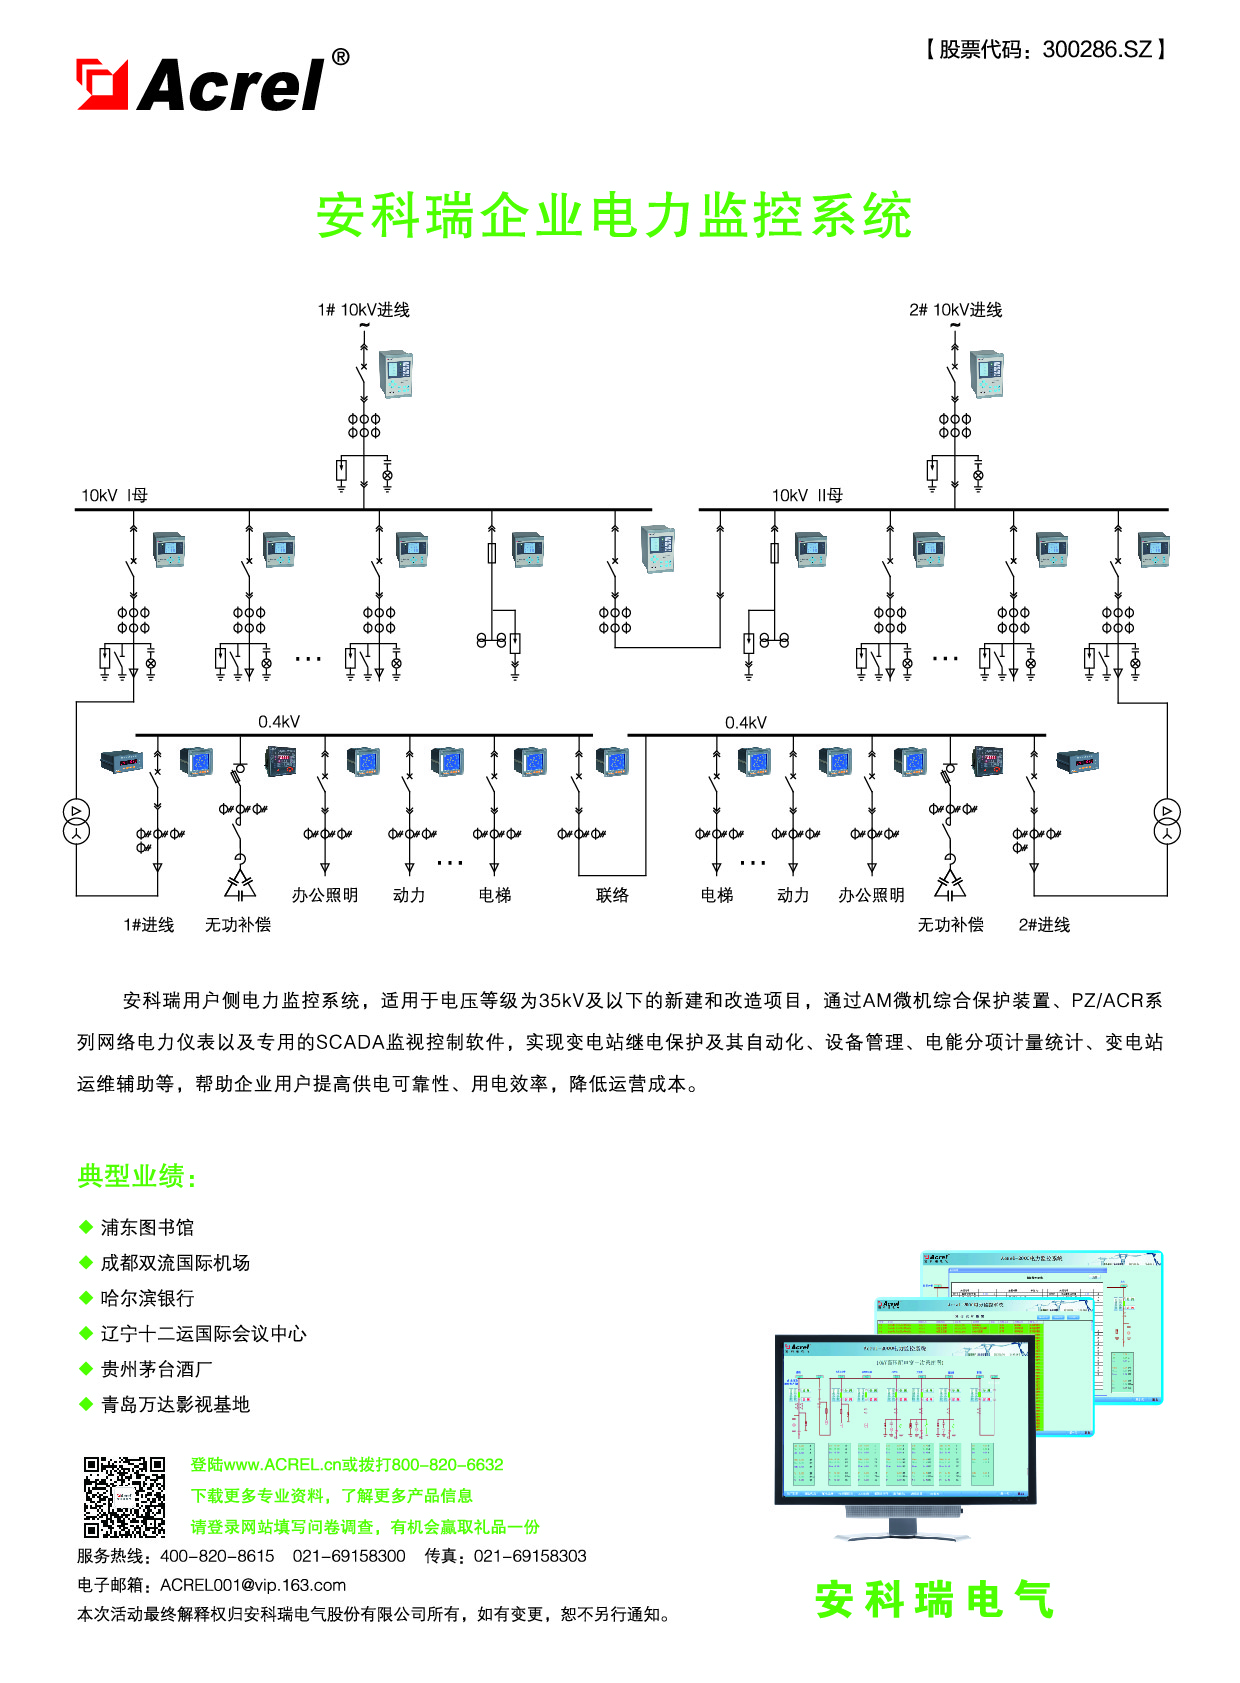 Acrel-2000电力监控系统在上海财经大学国定路校区的应用—安科瑞 胡烨